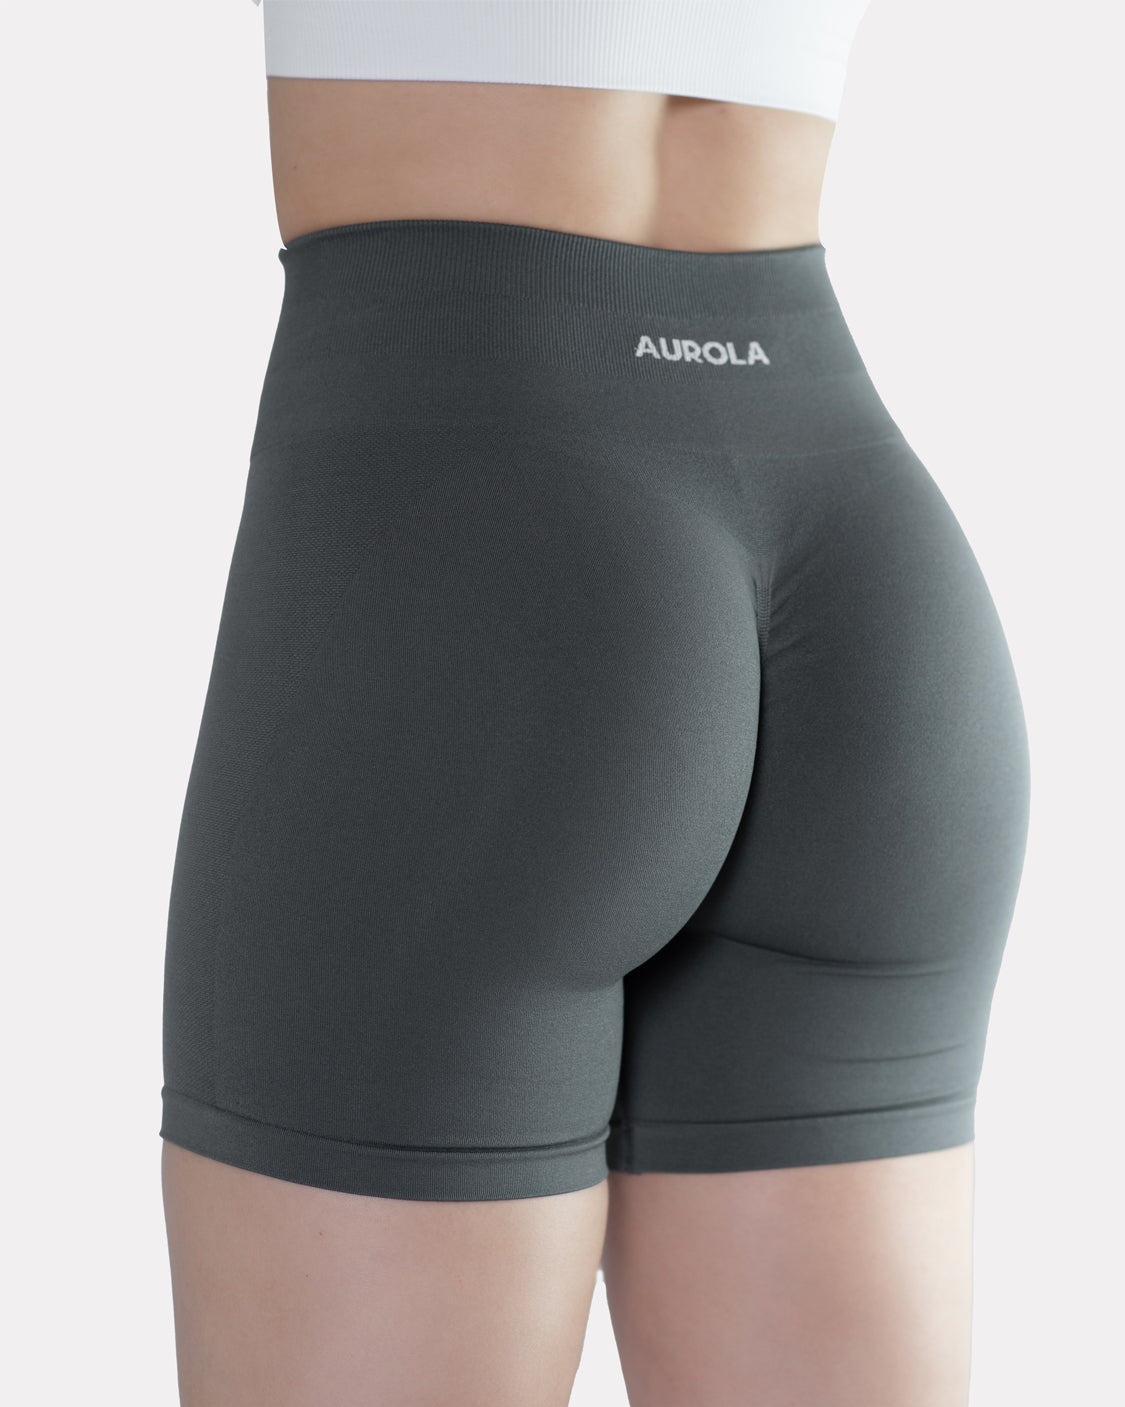  AUROLA Dream Tie Dye Workout Shorts For Women Seamless  Scrunch Soft Active Shorts